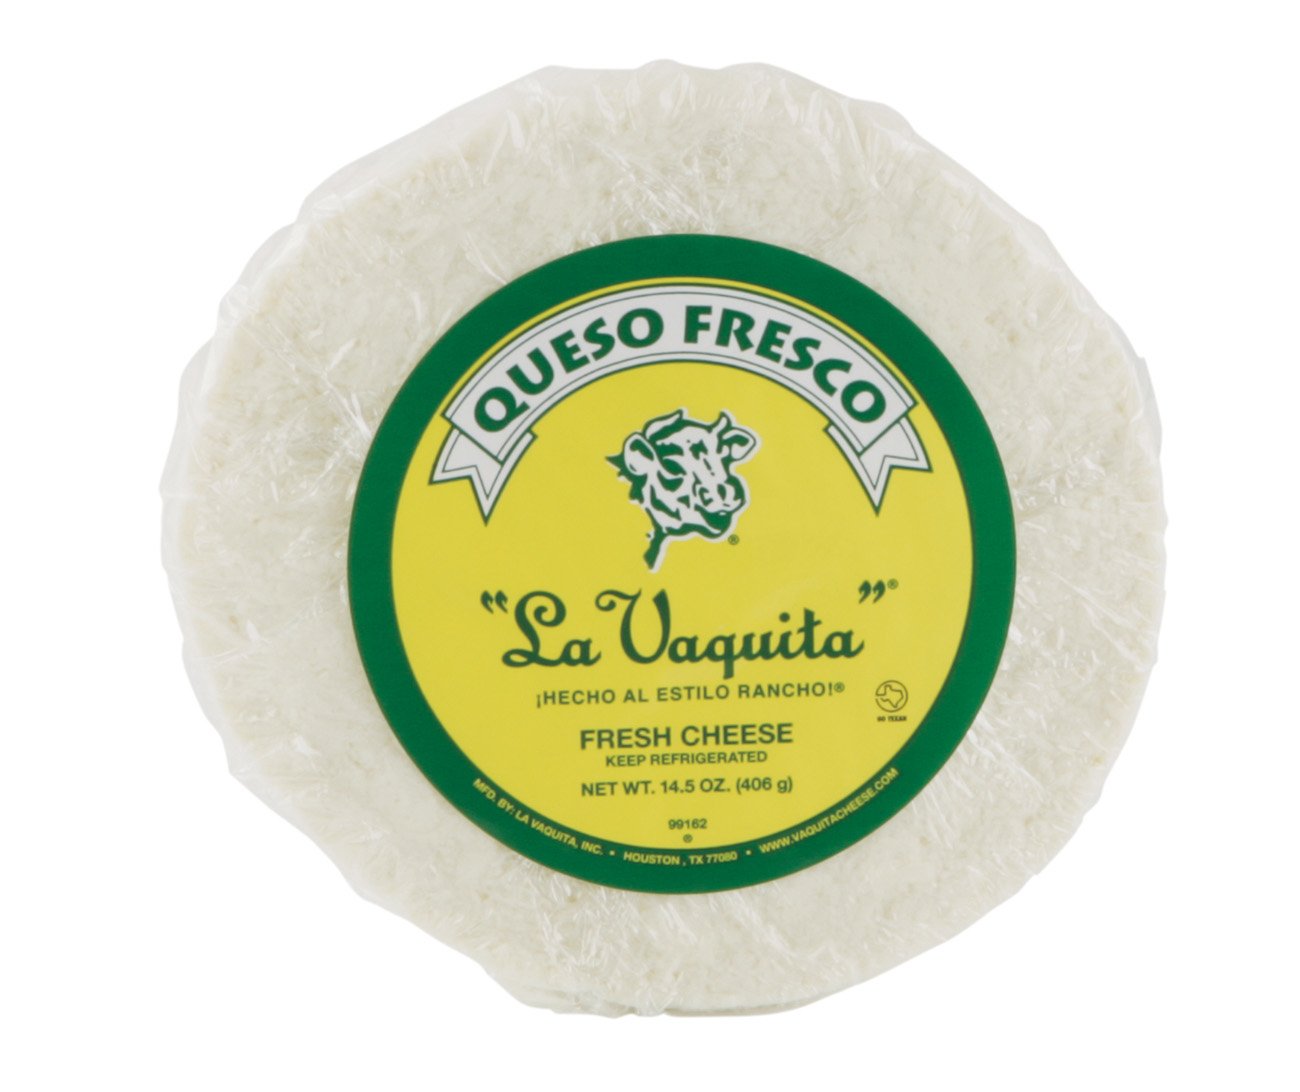 Queso fresco сыр где купить. Фреско чиз. Сыр Фреско. Кесо Фреско сыр. Fresh Cheese фото.